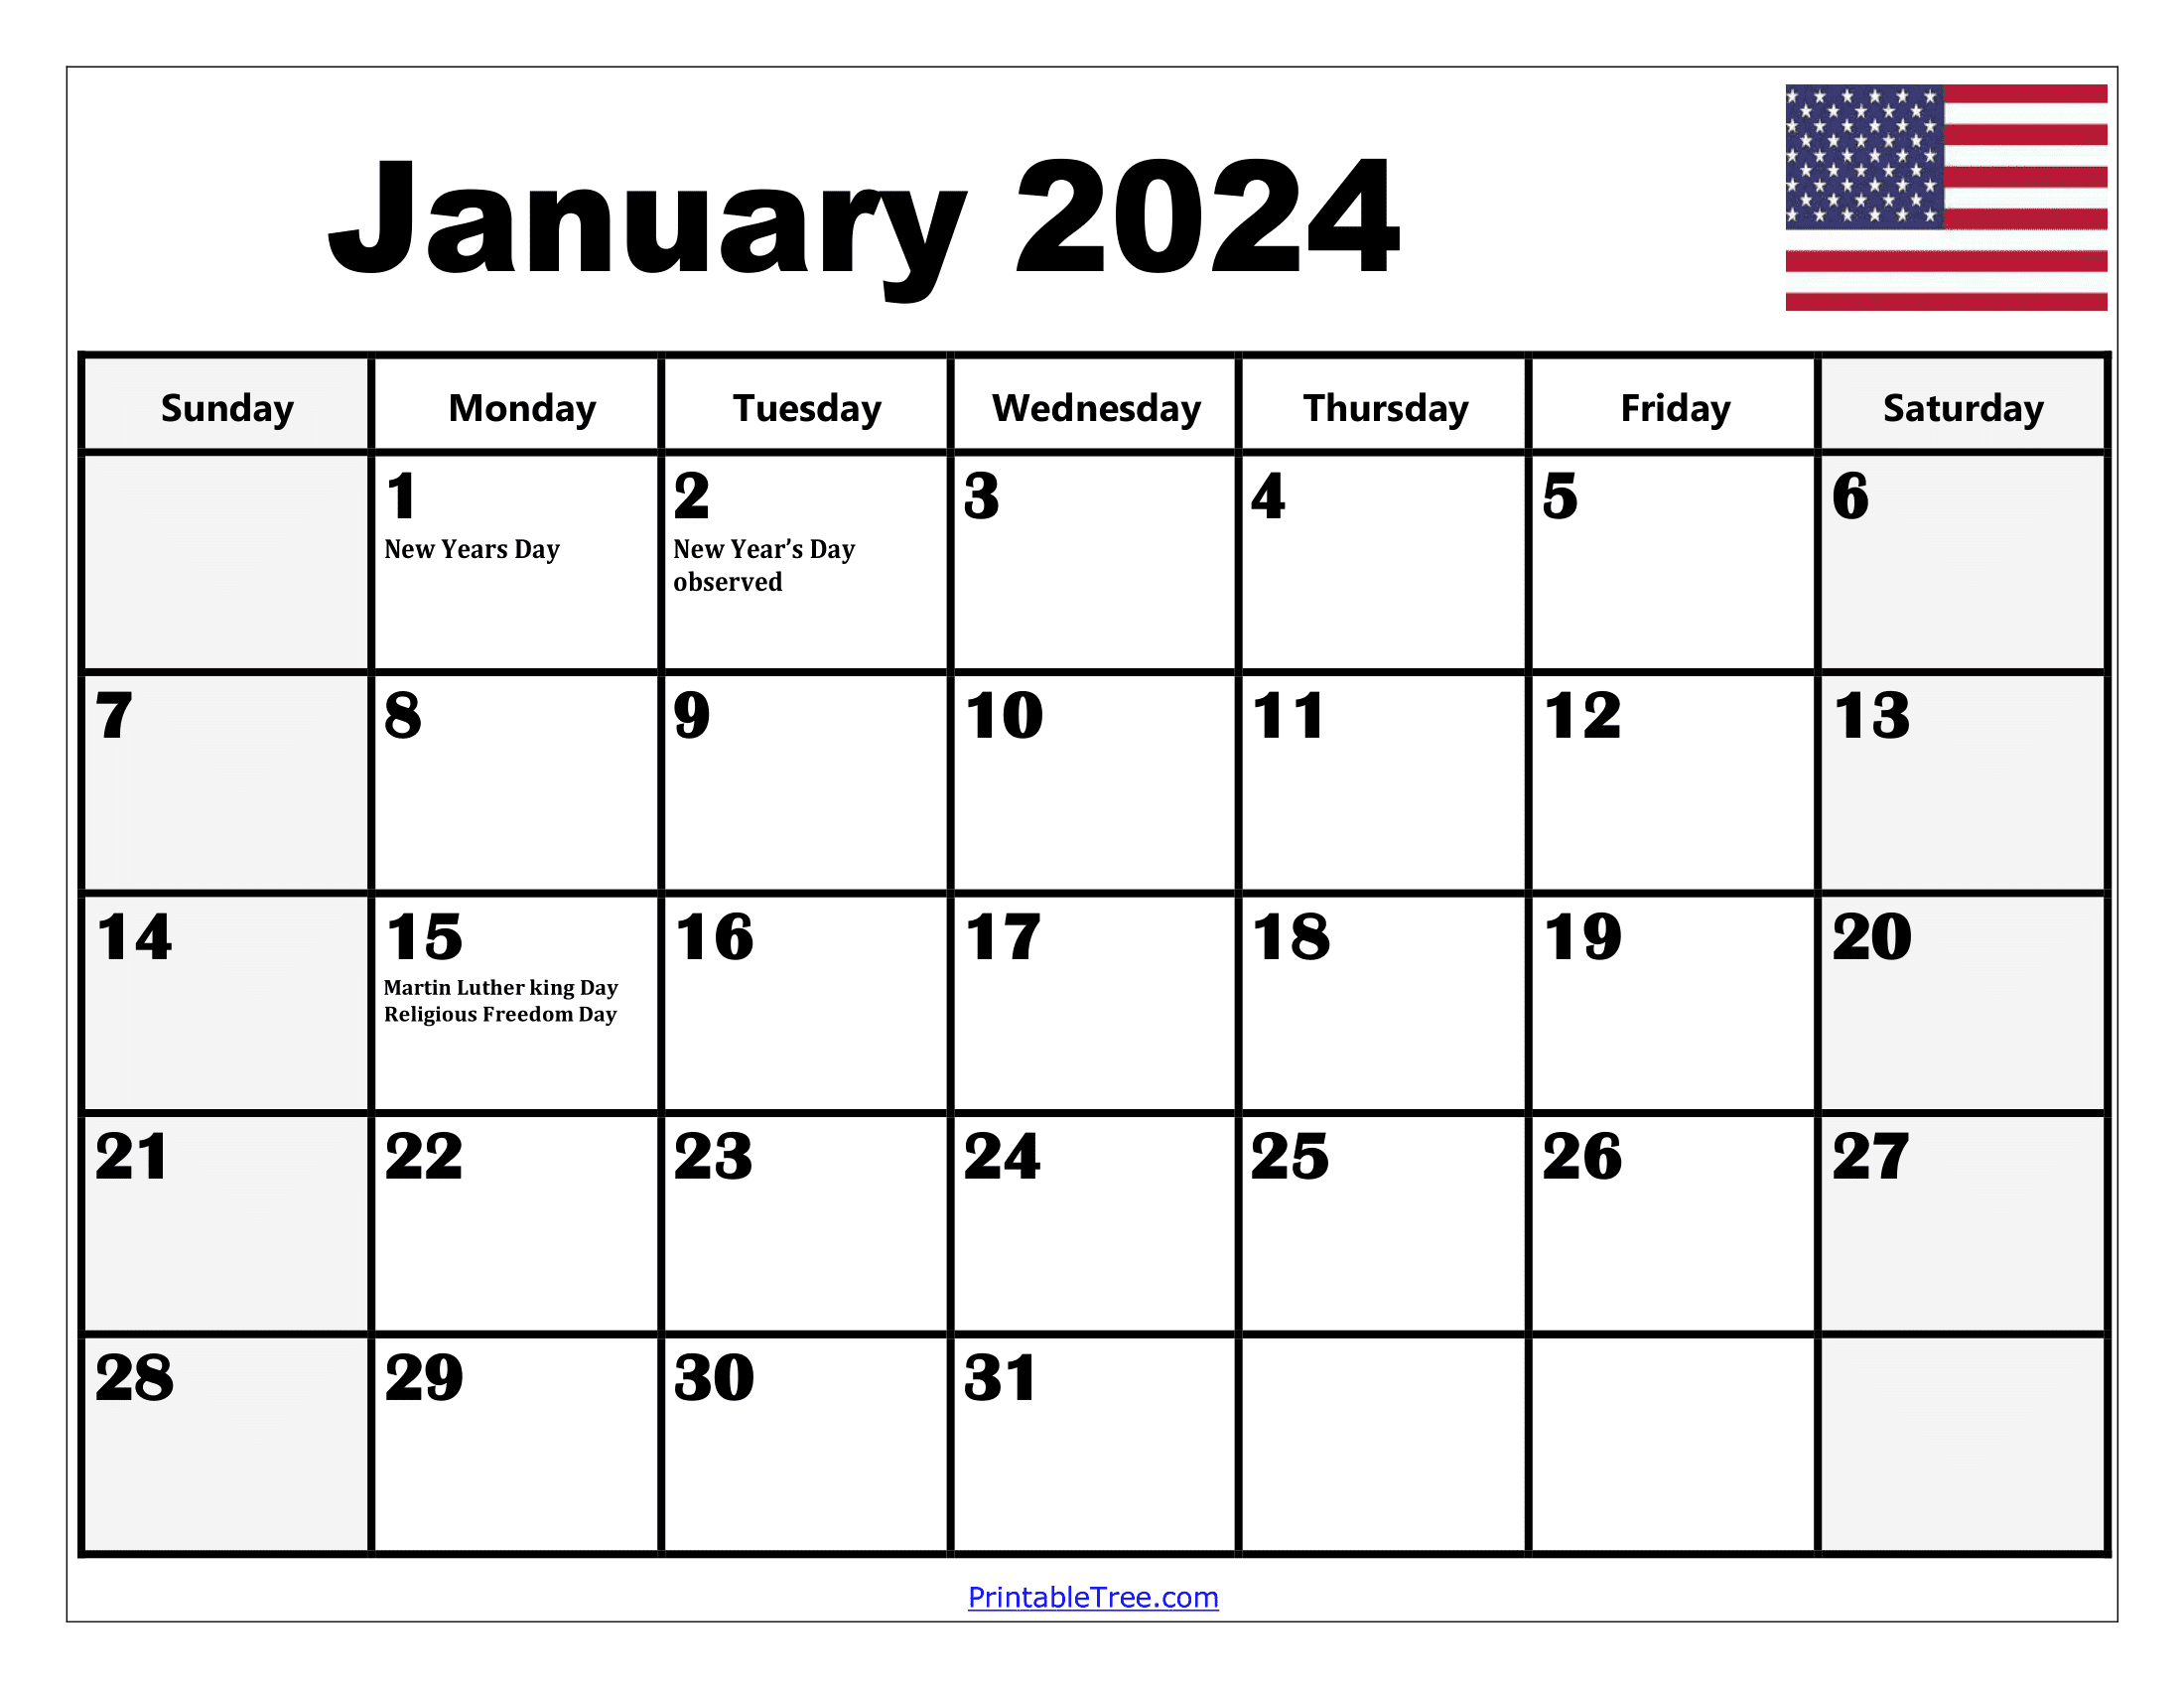 January 2024 Calendar Printable Pdf Template With Holidays for Free Printable Calendar January 2024 With Holidays